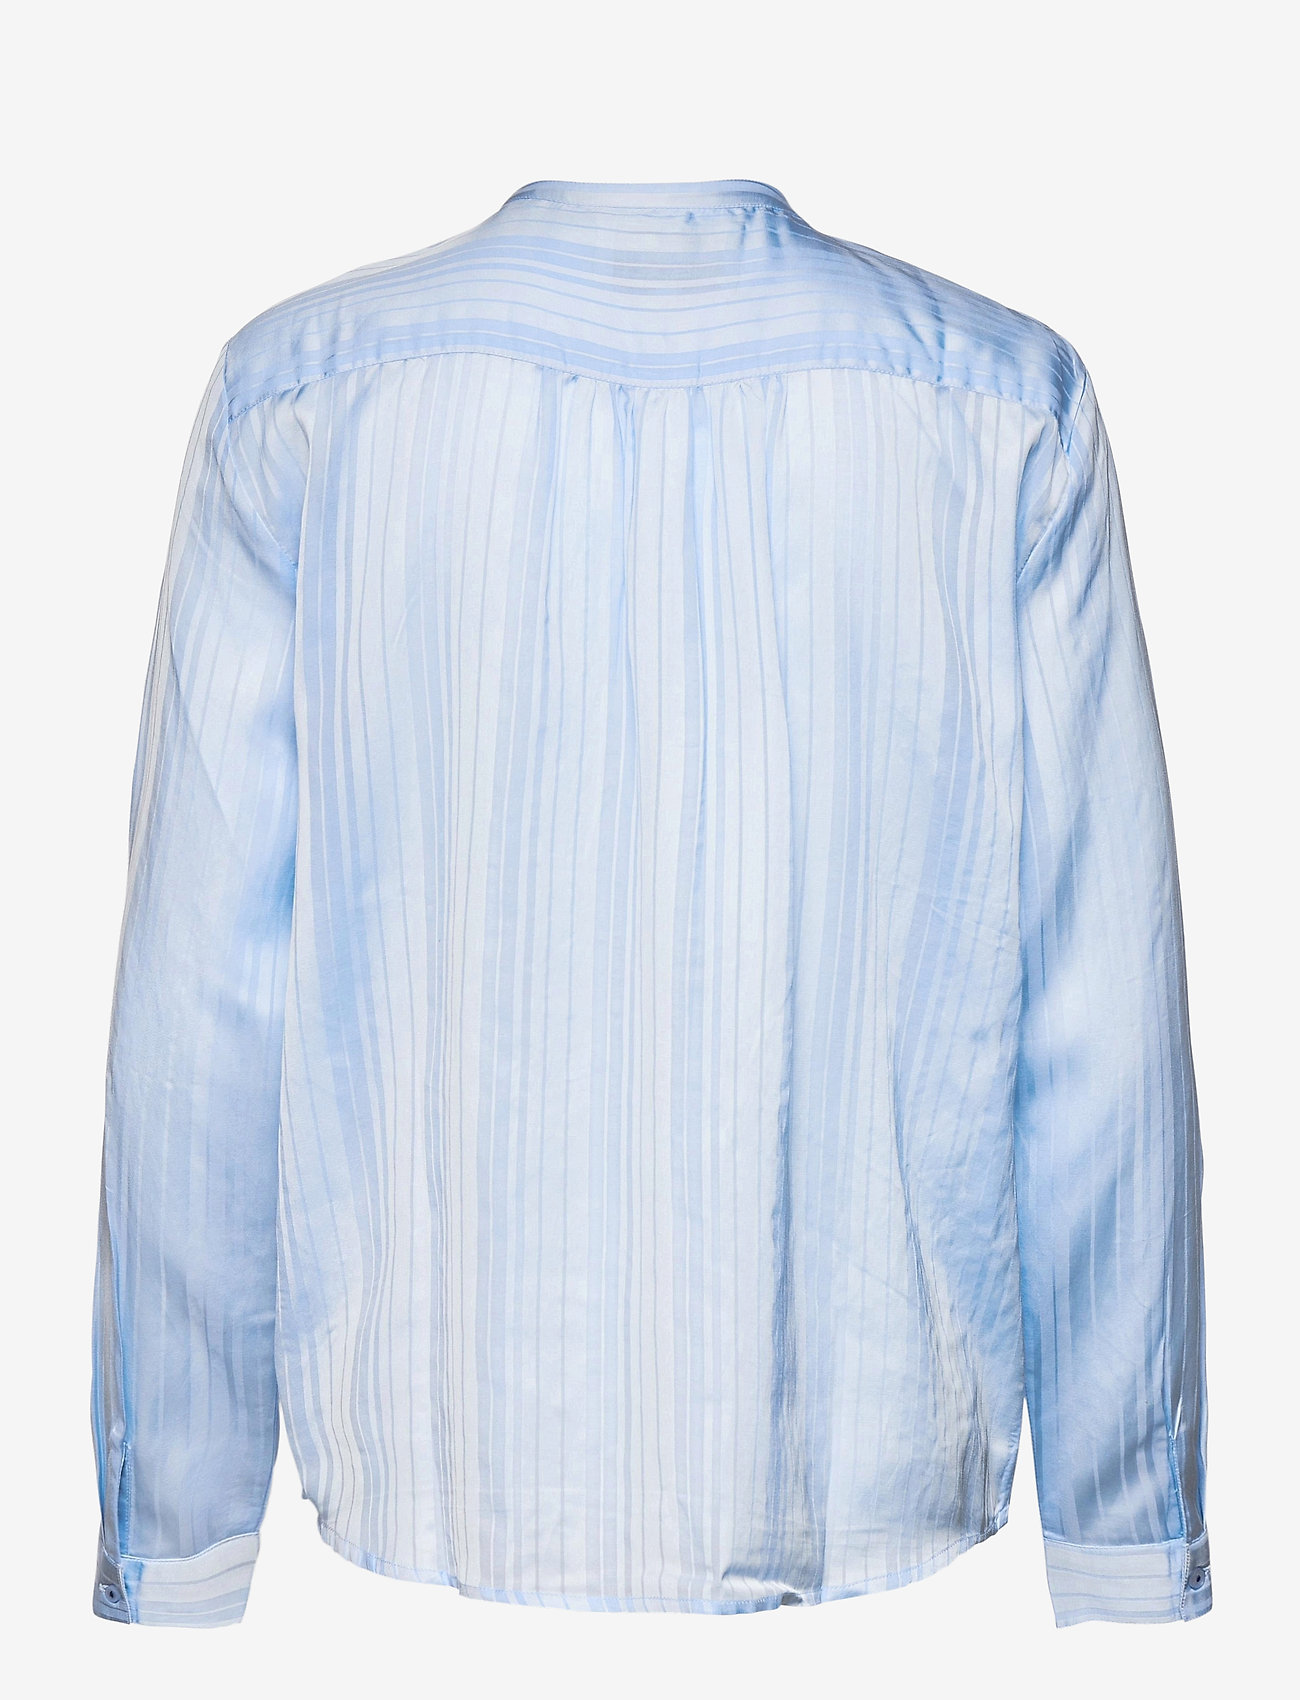 Lollys Laundry - Lux Shirt - pitkähihaiset puserot - light blue - 1